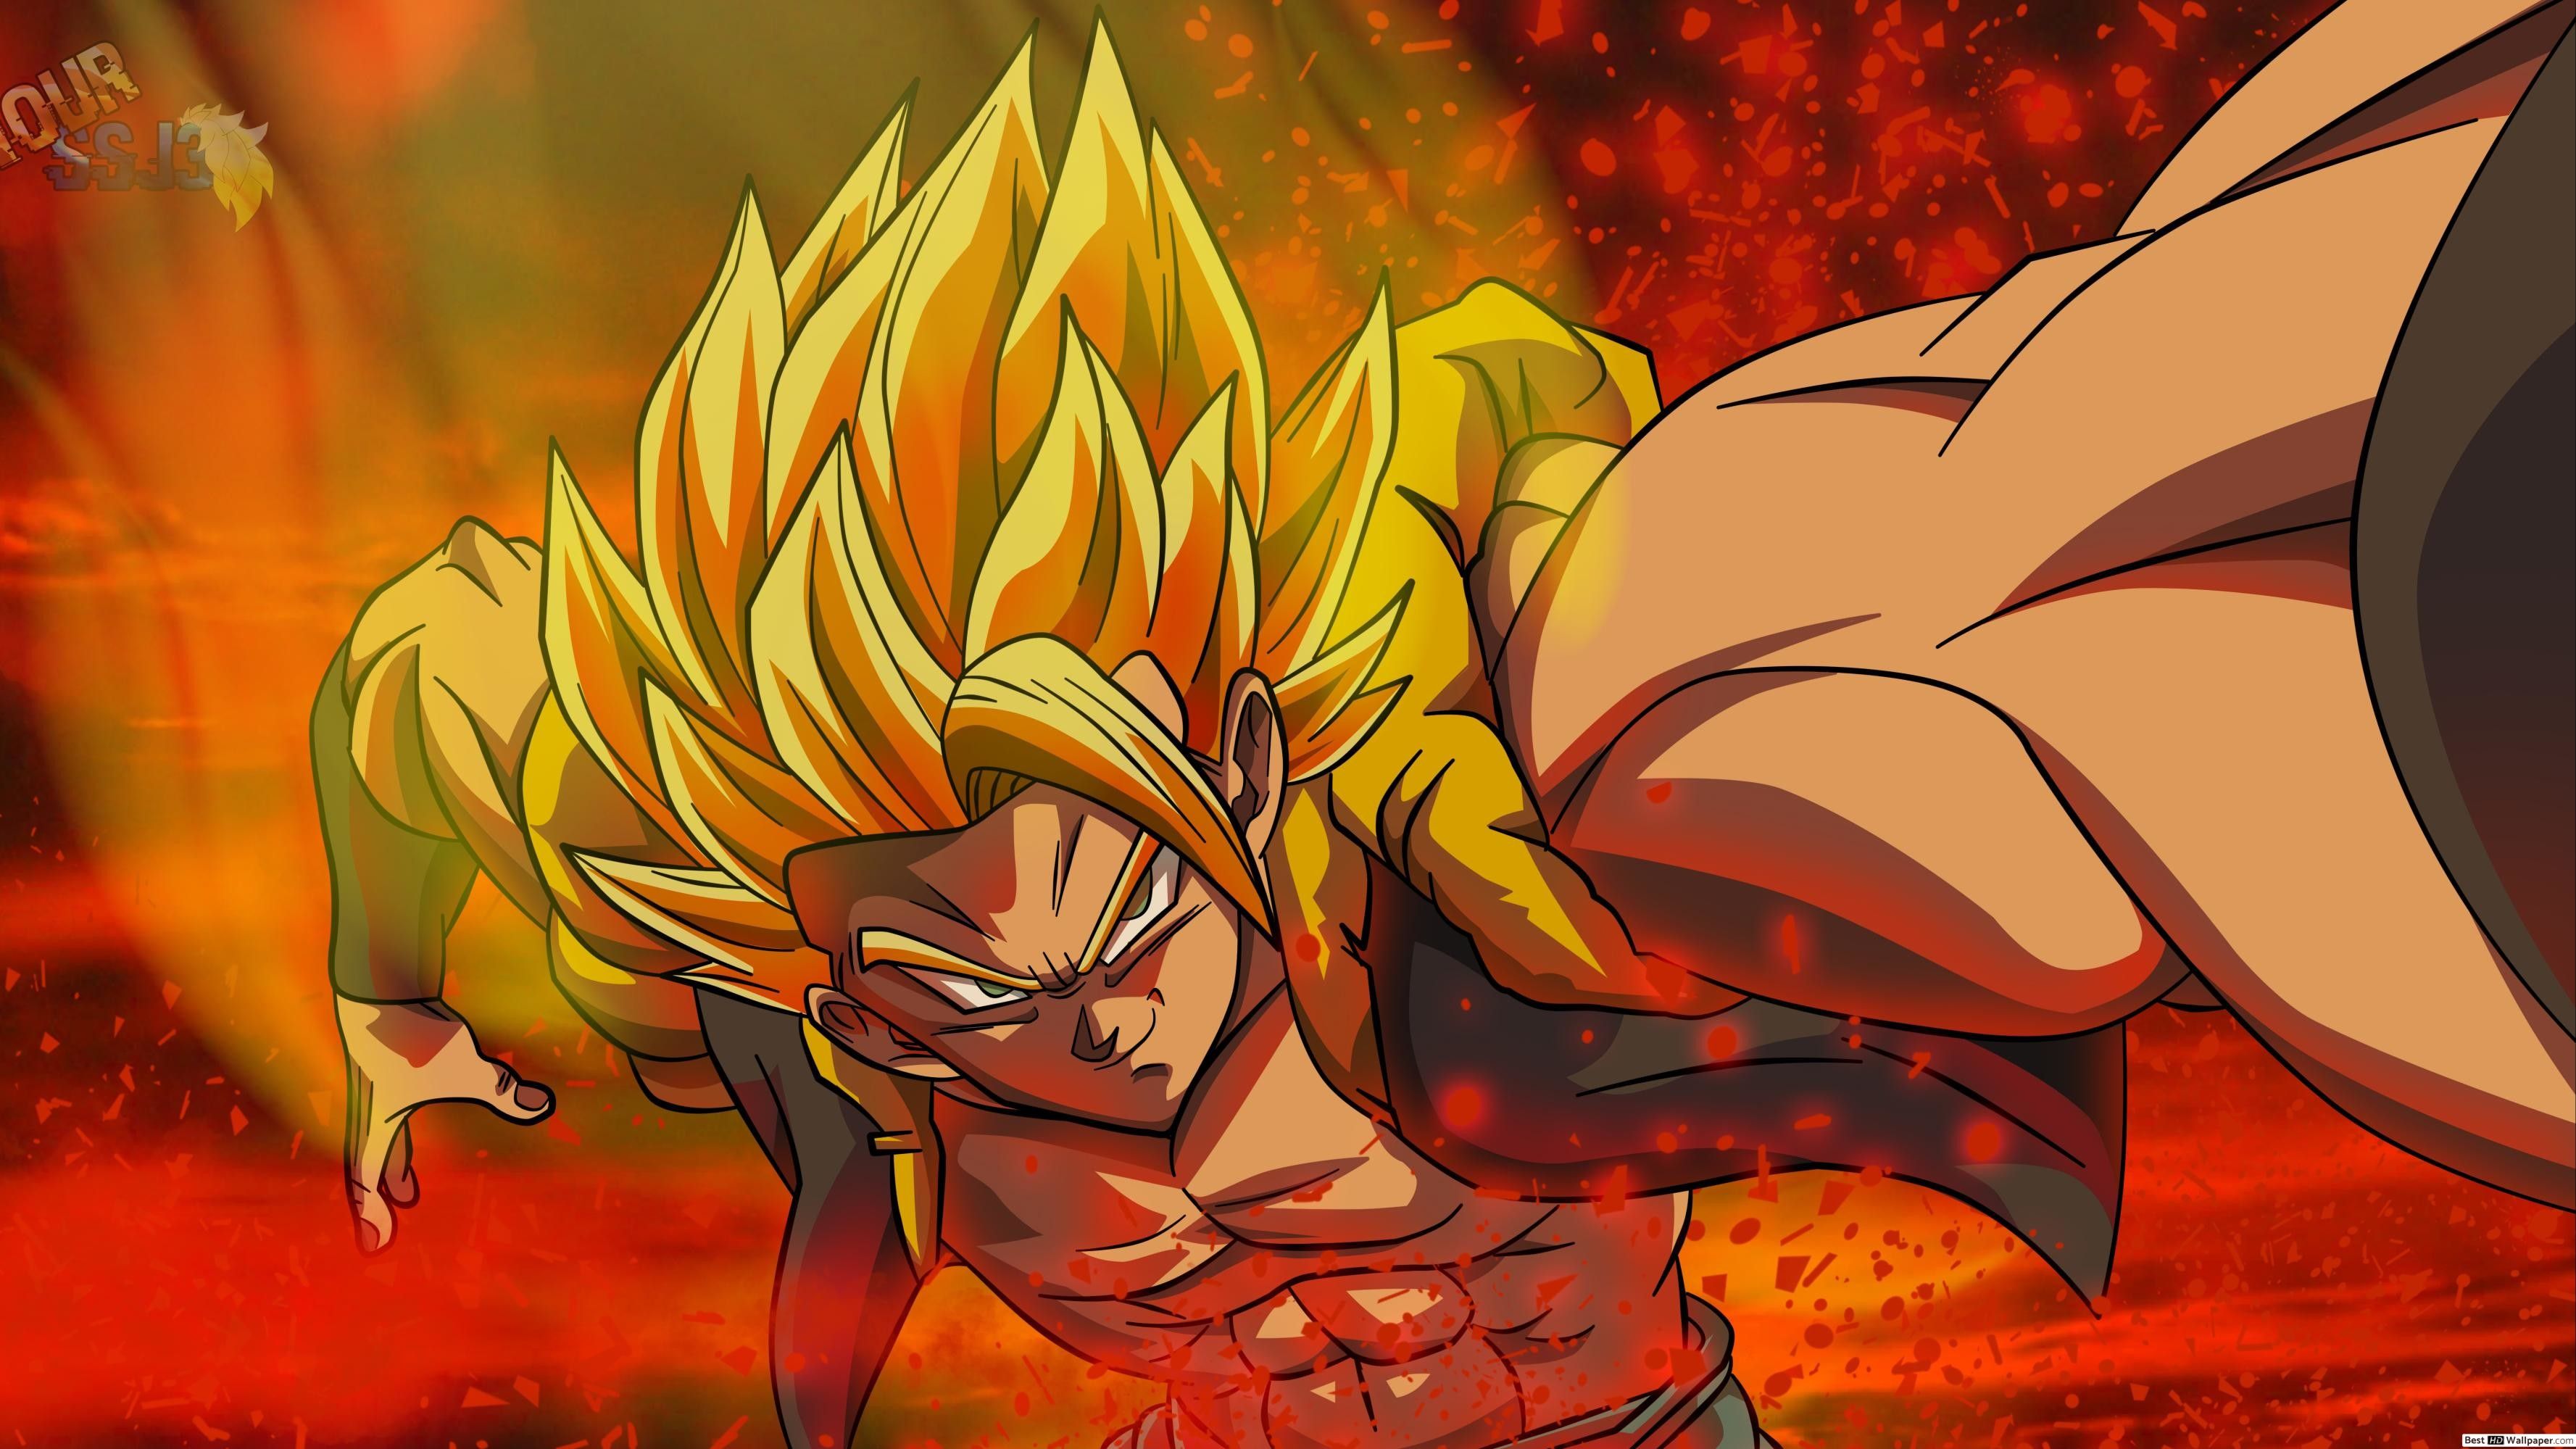 Goku SS4 wallpaper by Doczin  Download on ZEDGE  fed7